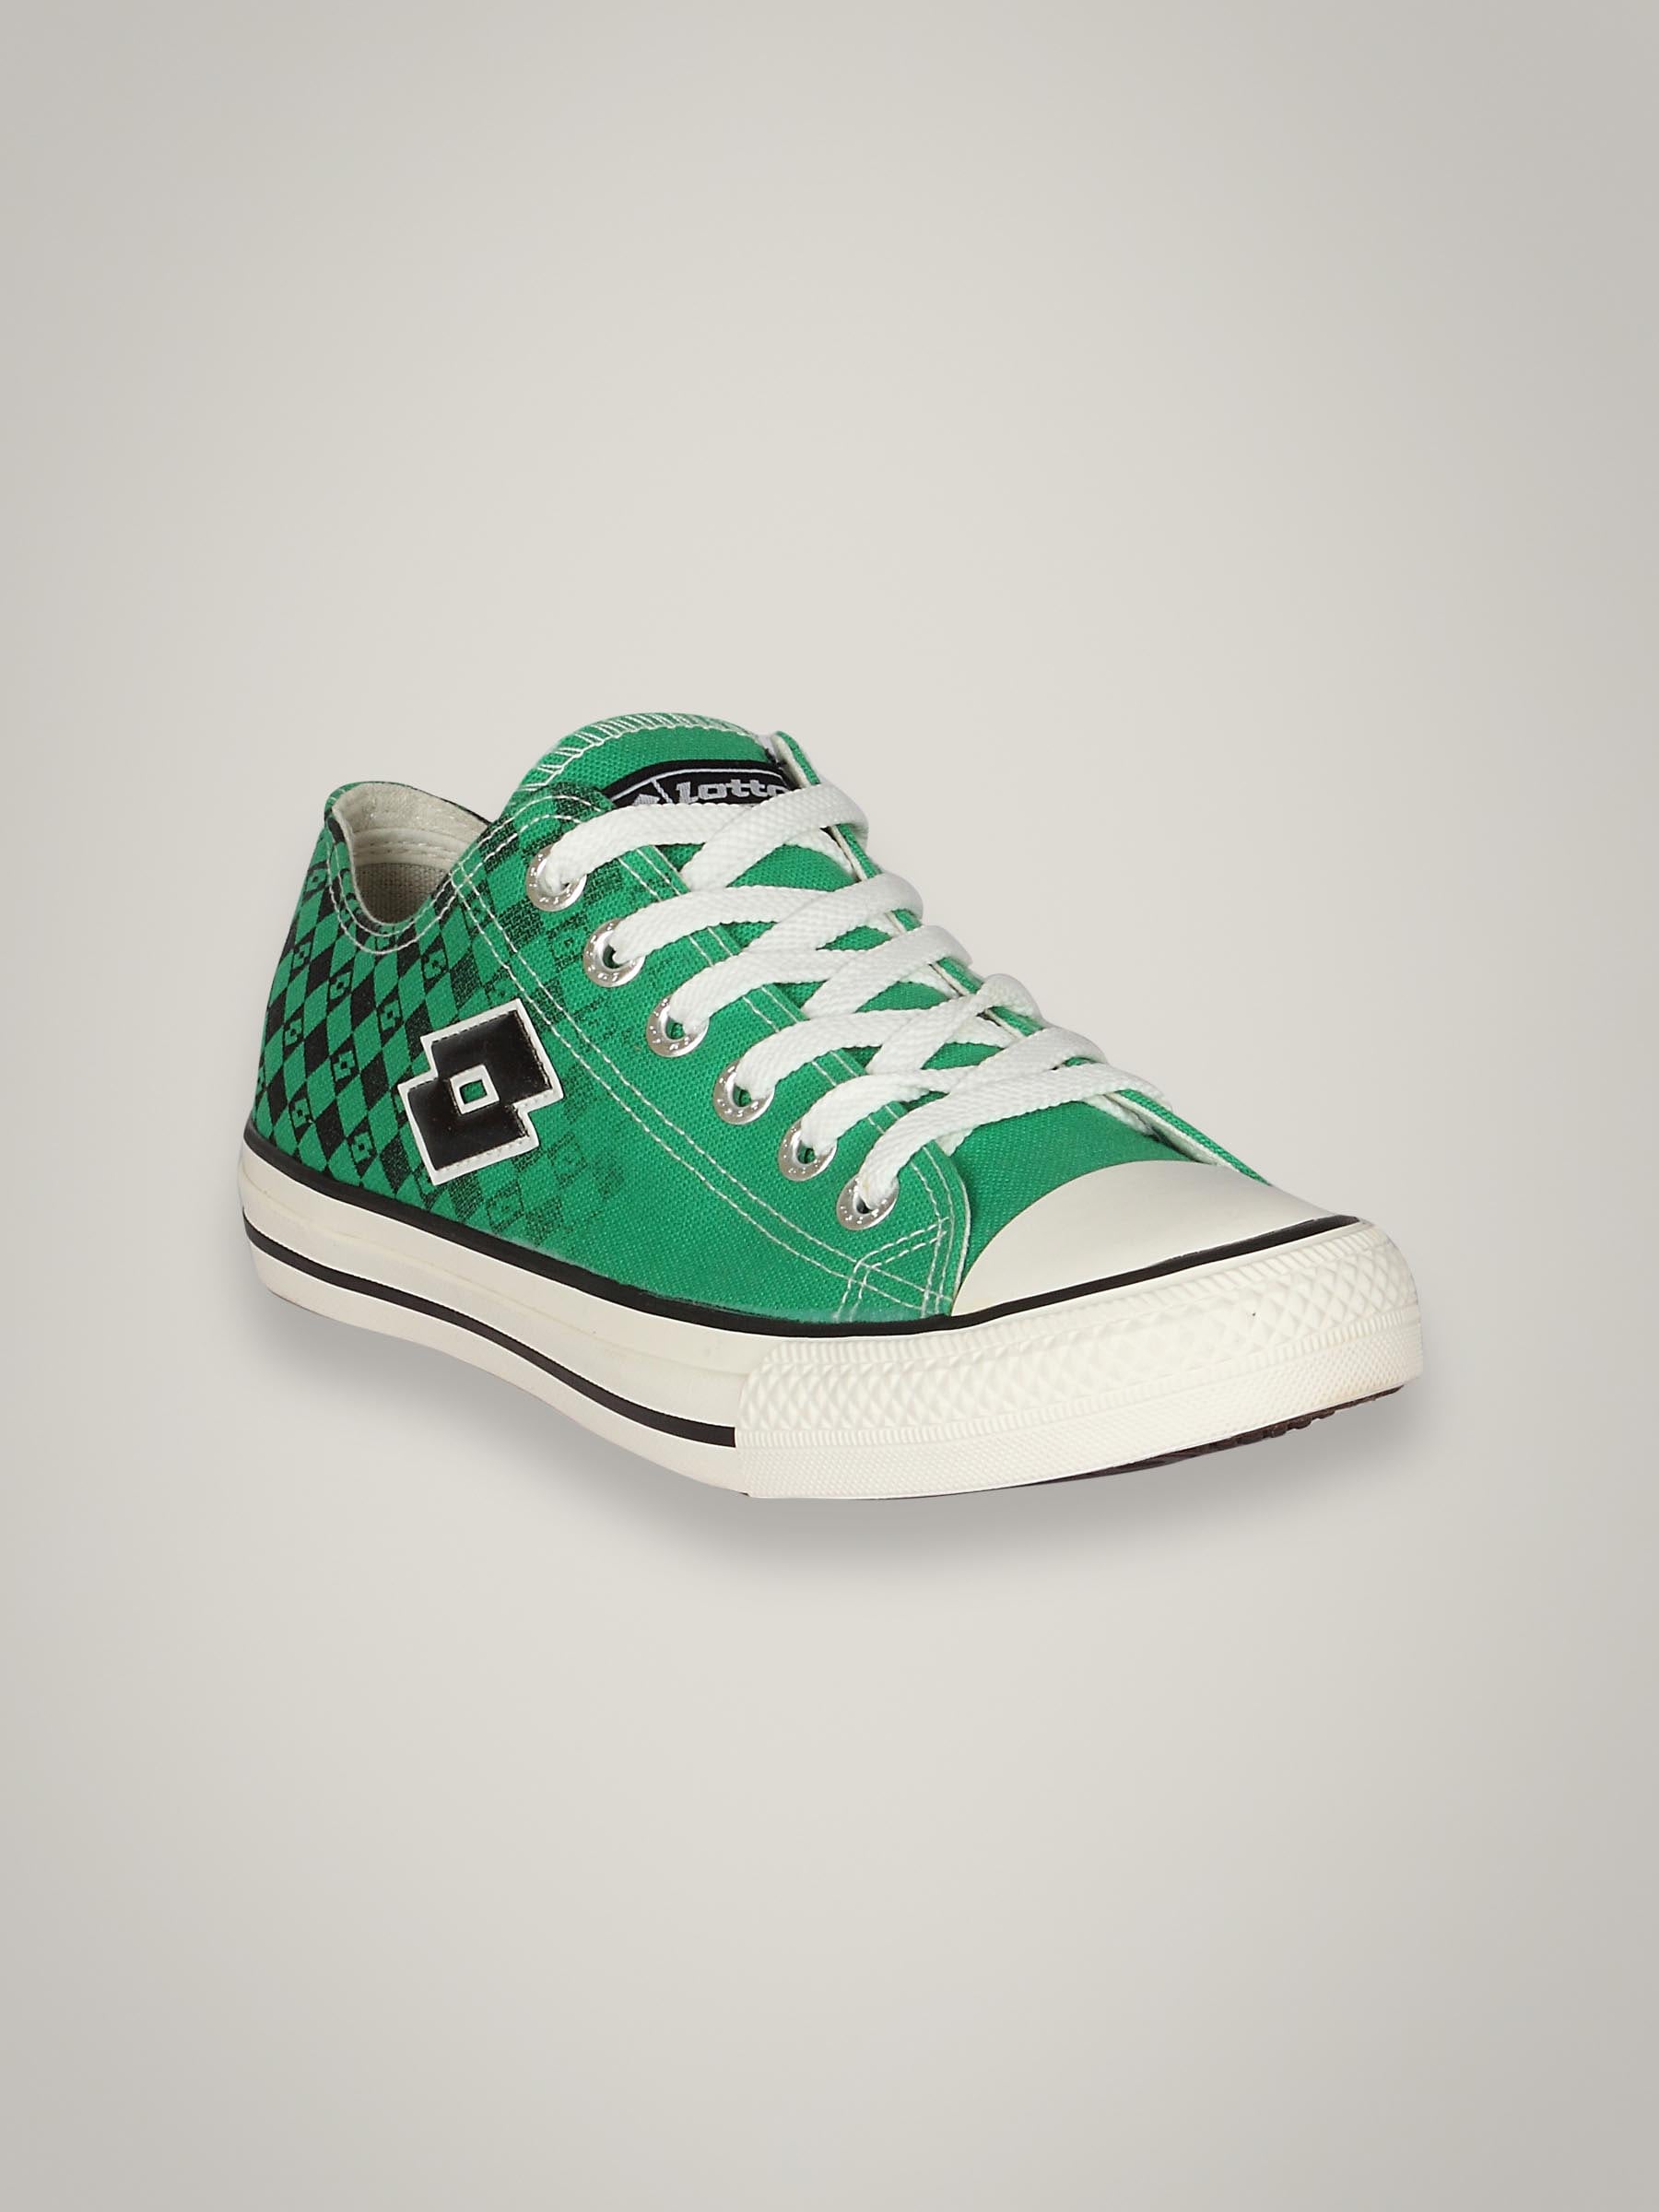 Lotto Men's Dynamo Green Canvas Shoe